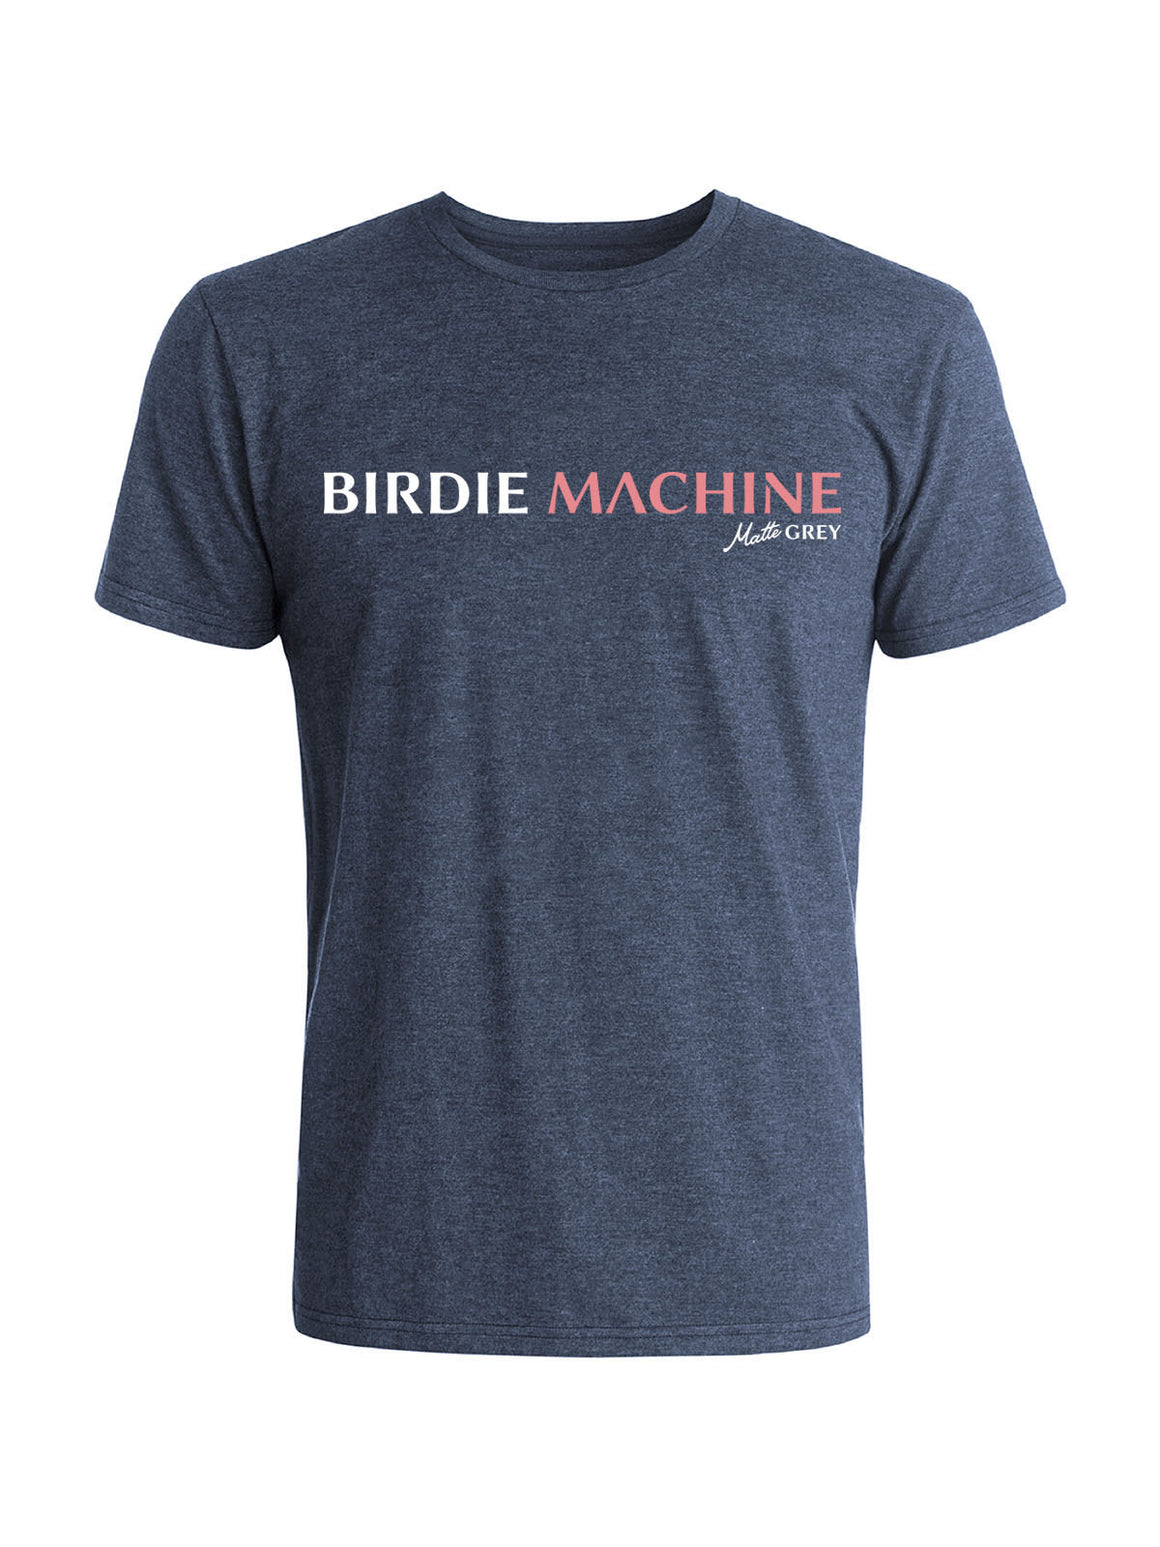 Birdie Machine Tee - Navy (White / Persimmon)